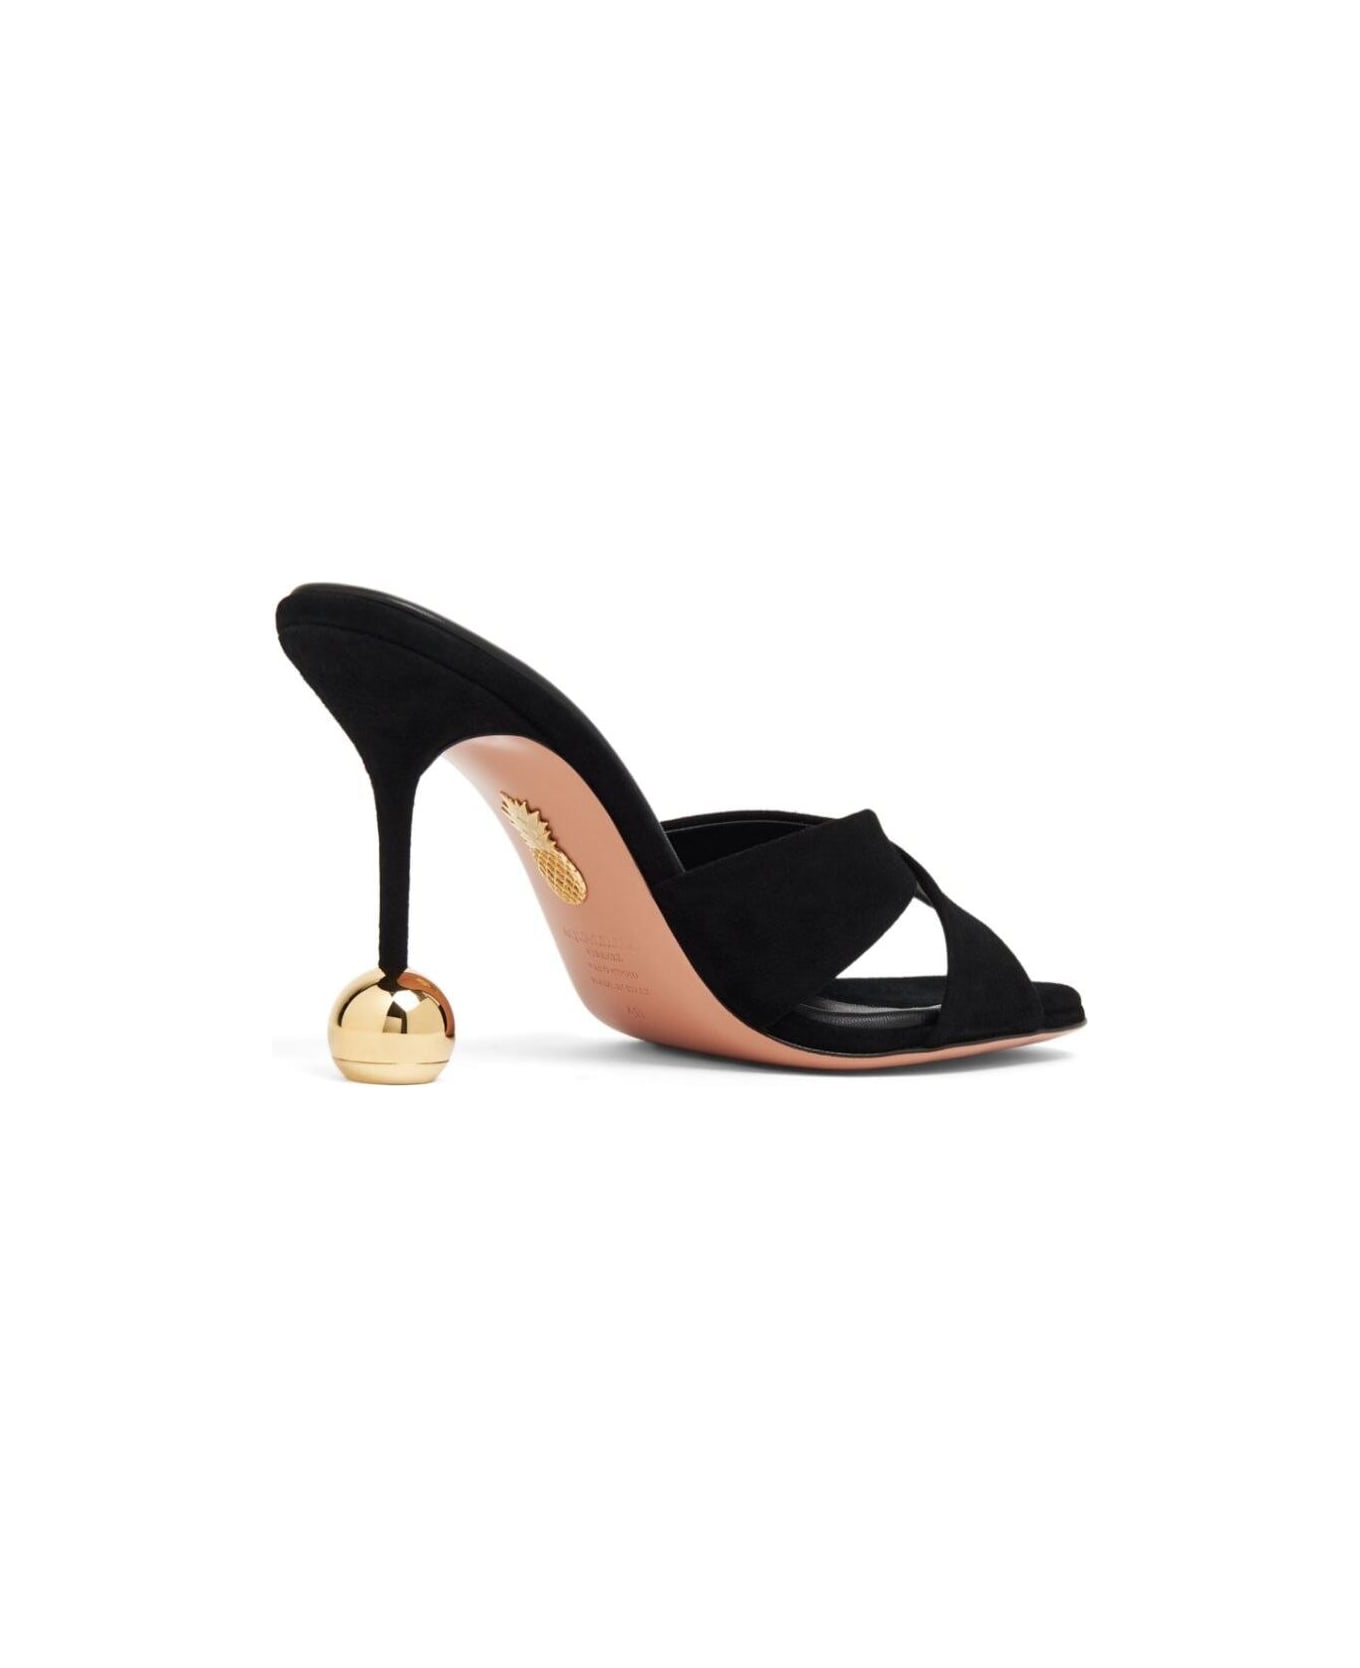 Aquazzura Black Sandals With High Sculpted Heel In Suede Woman - Black